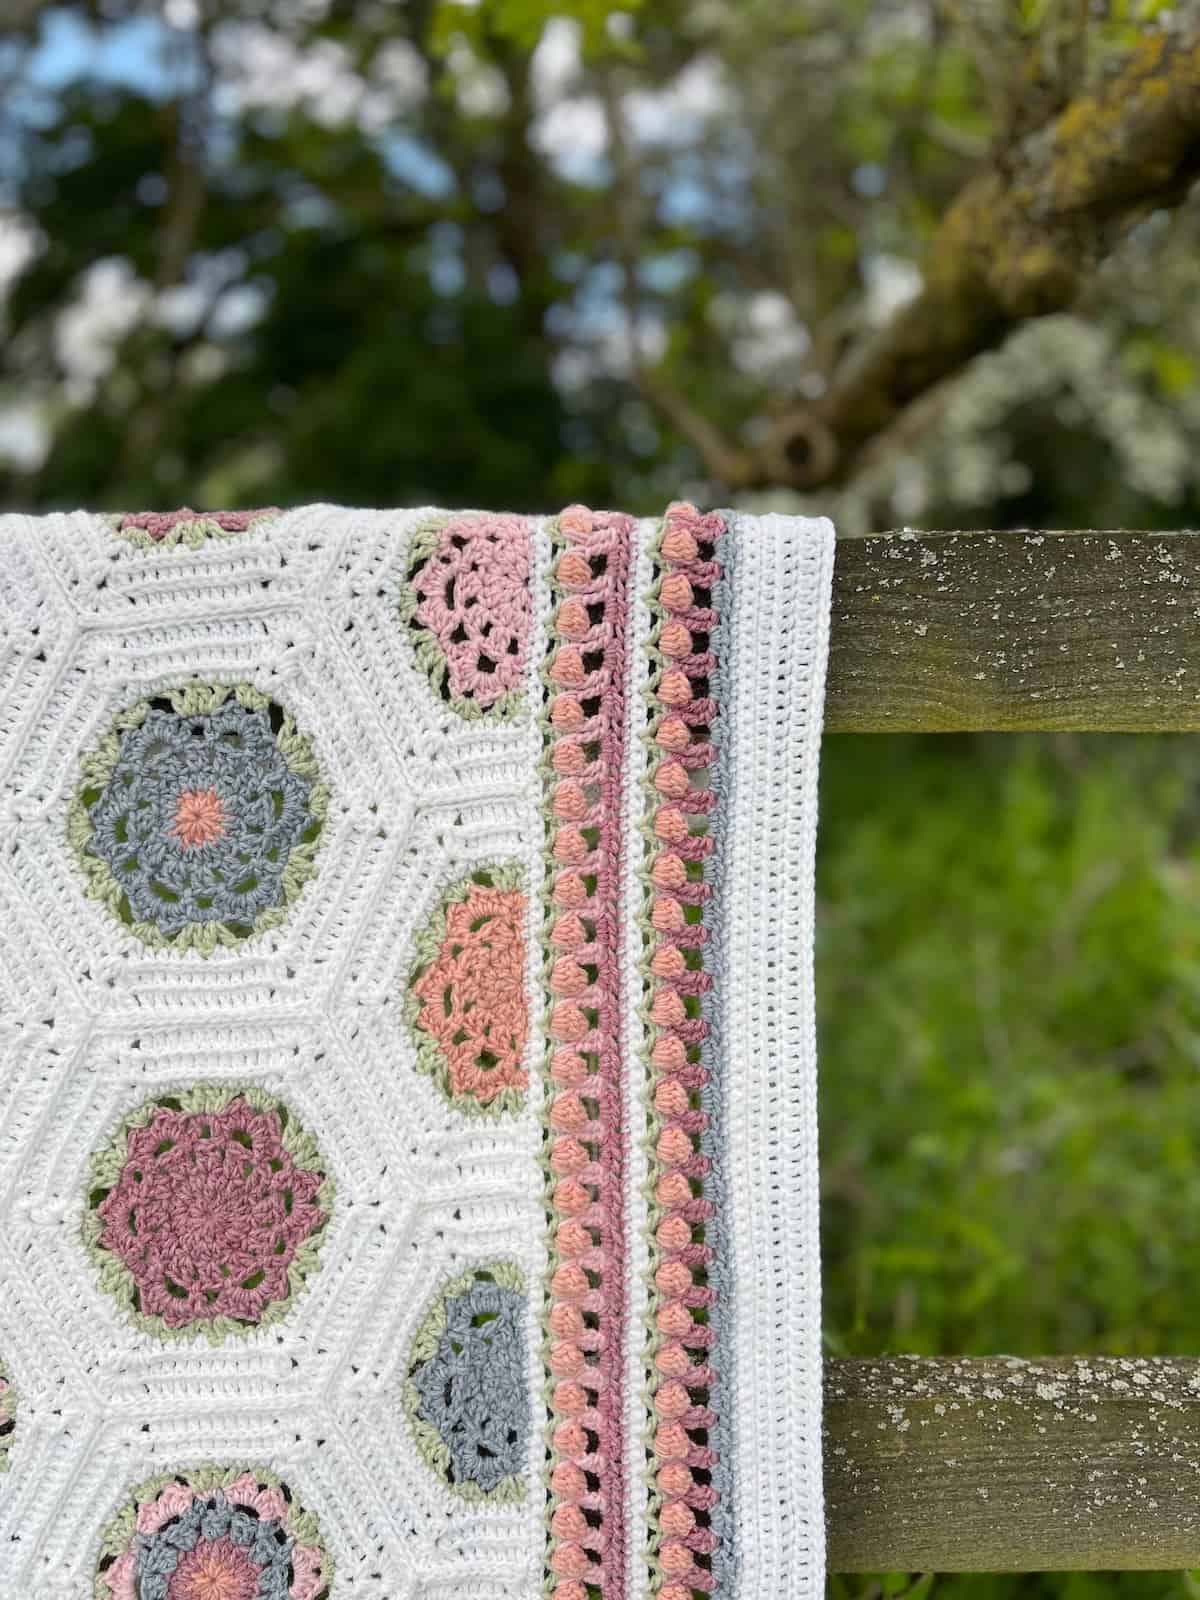 Flower stitch crochet border shown on hexagon blanket.